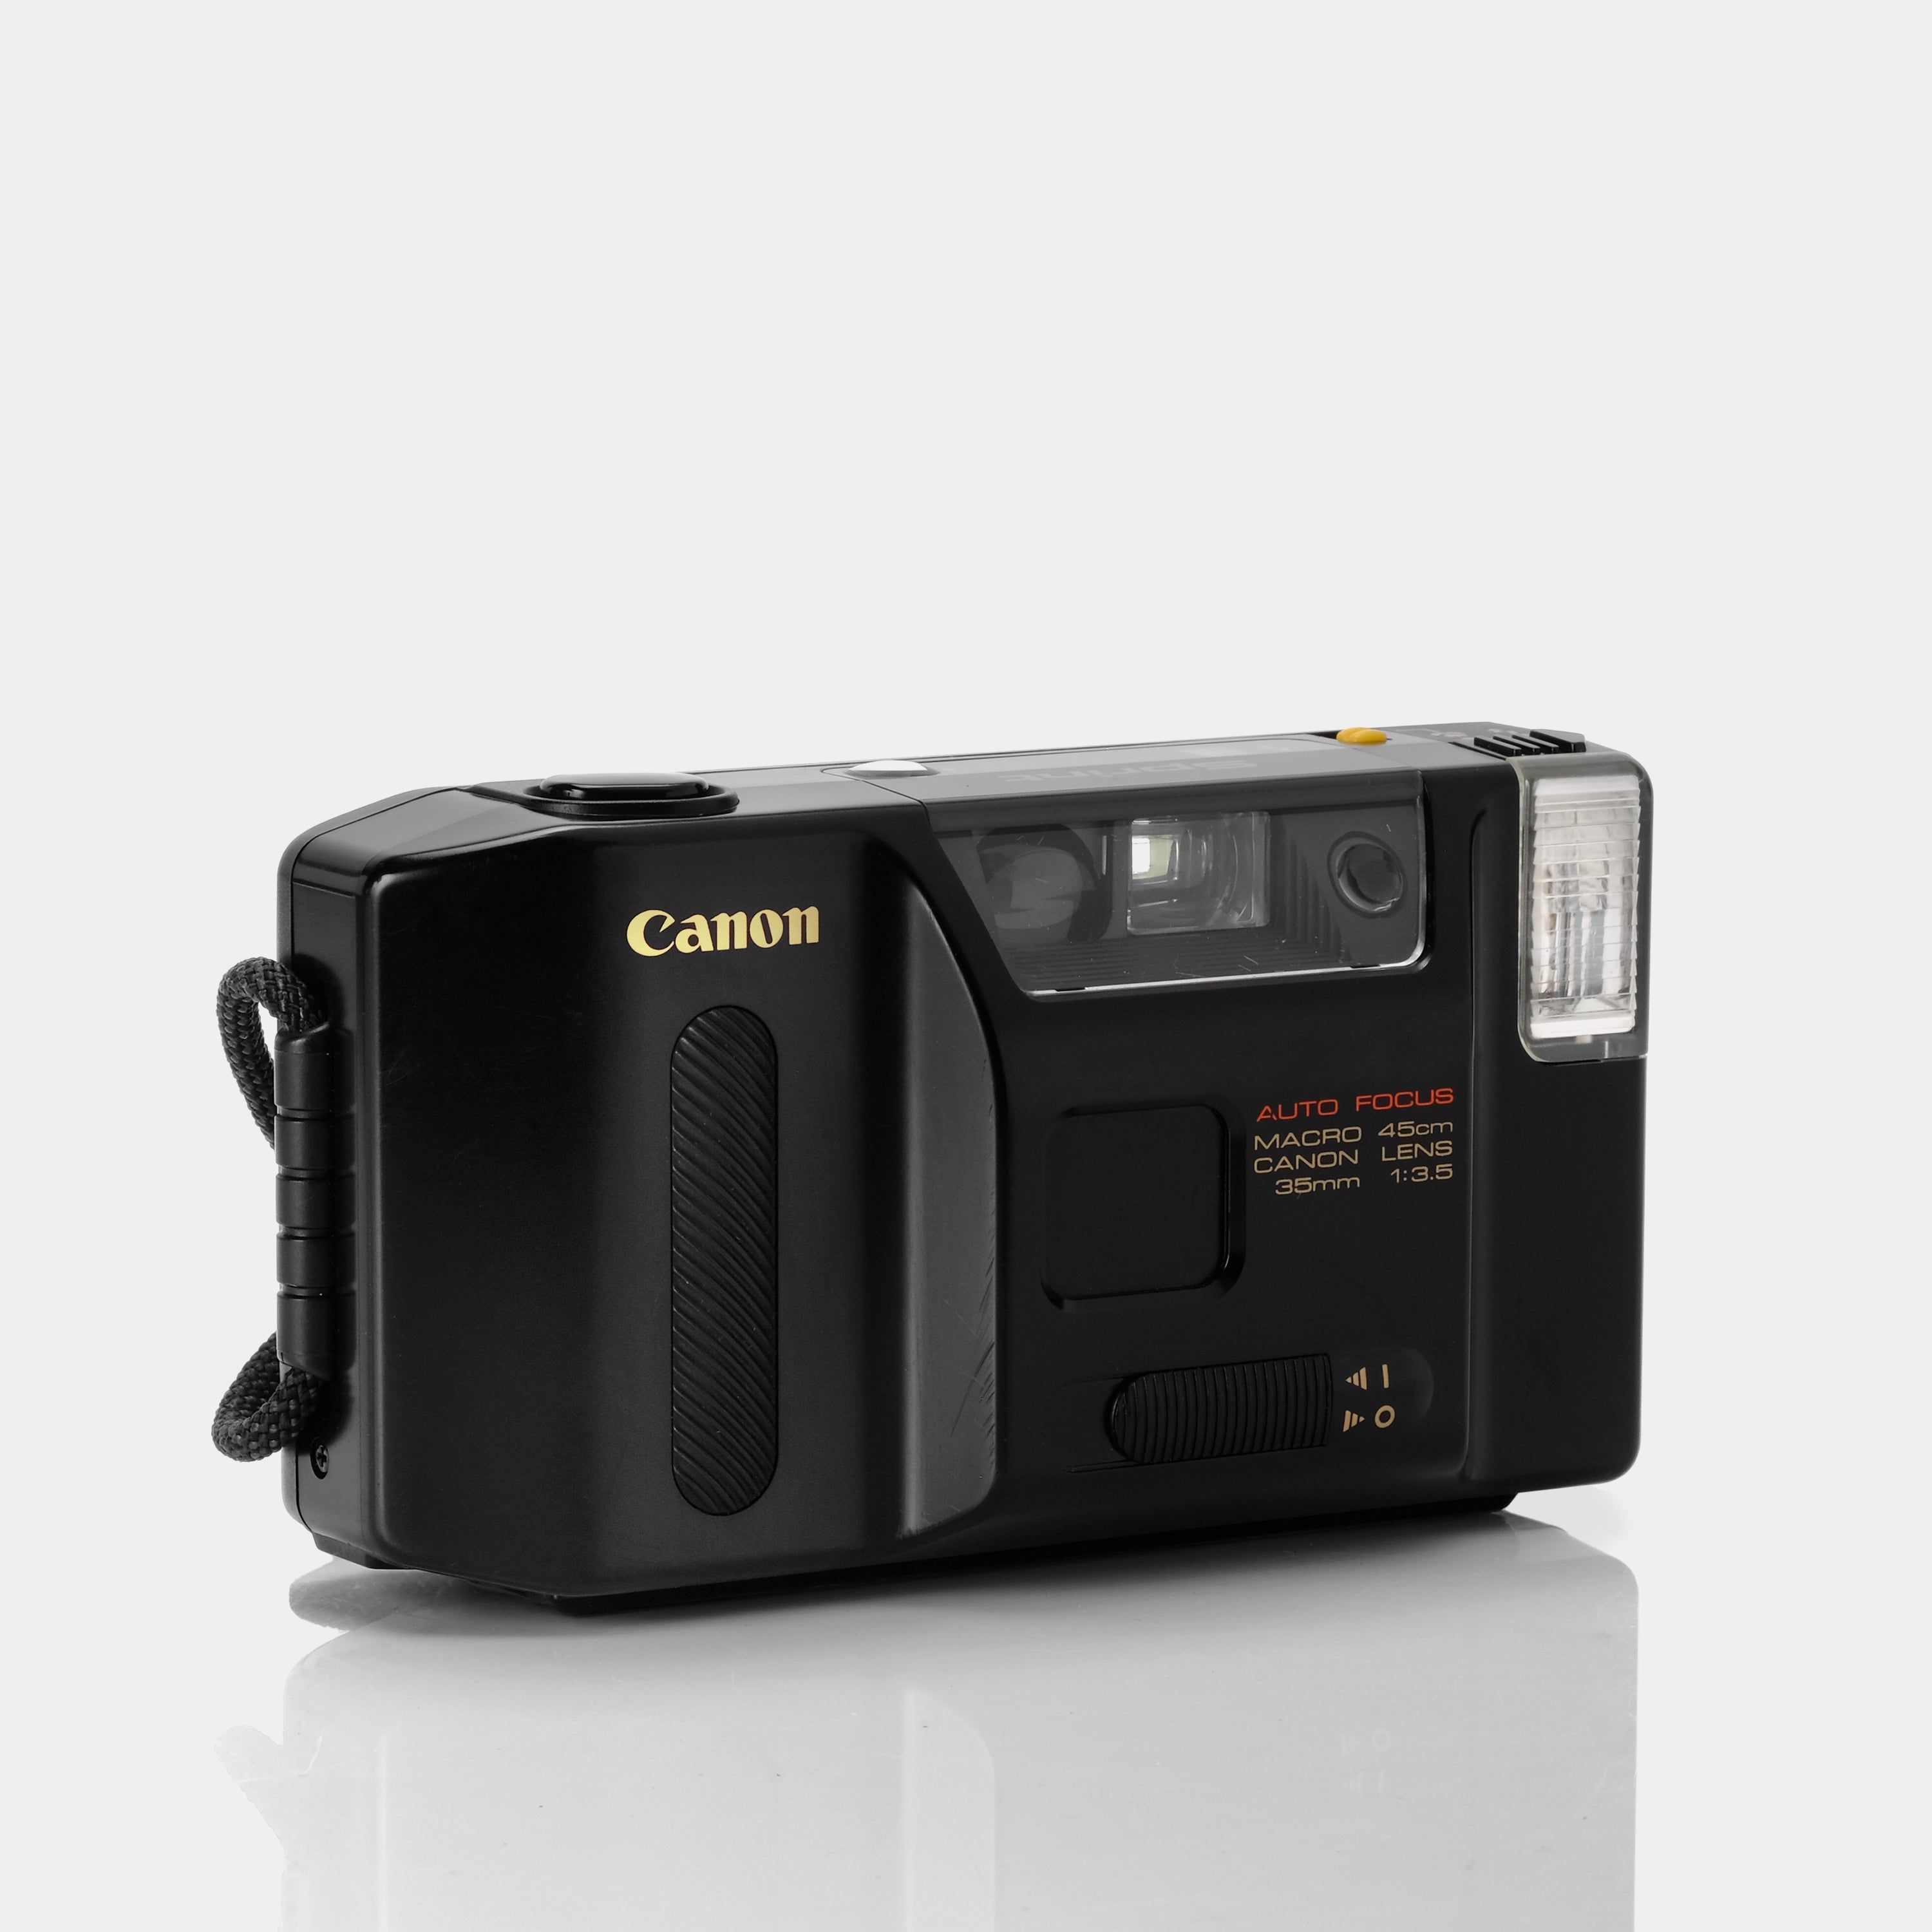 Canon Sprint 35mm Film Camera